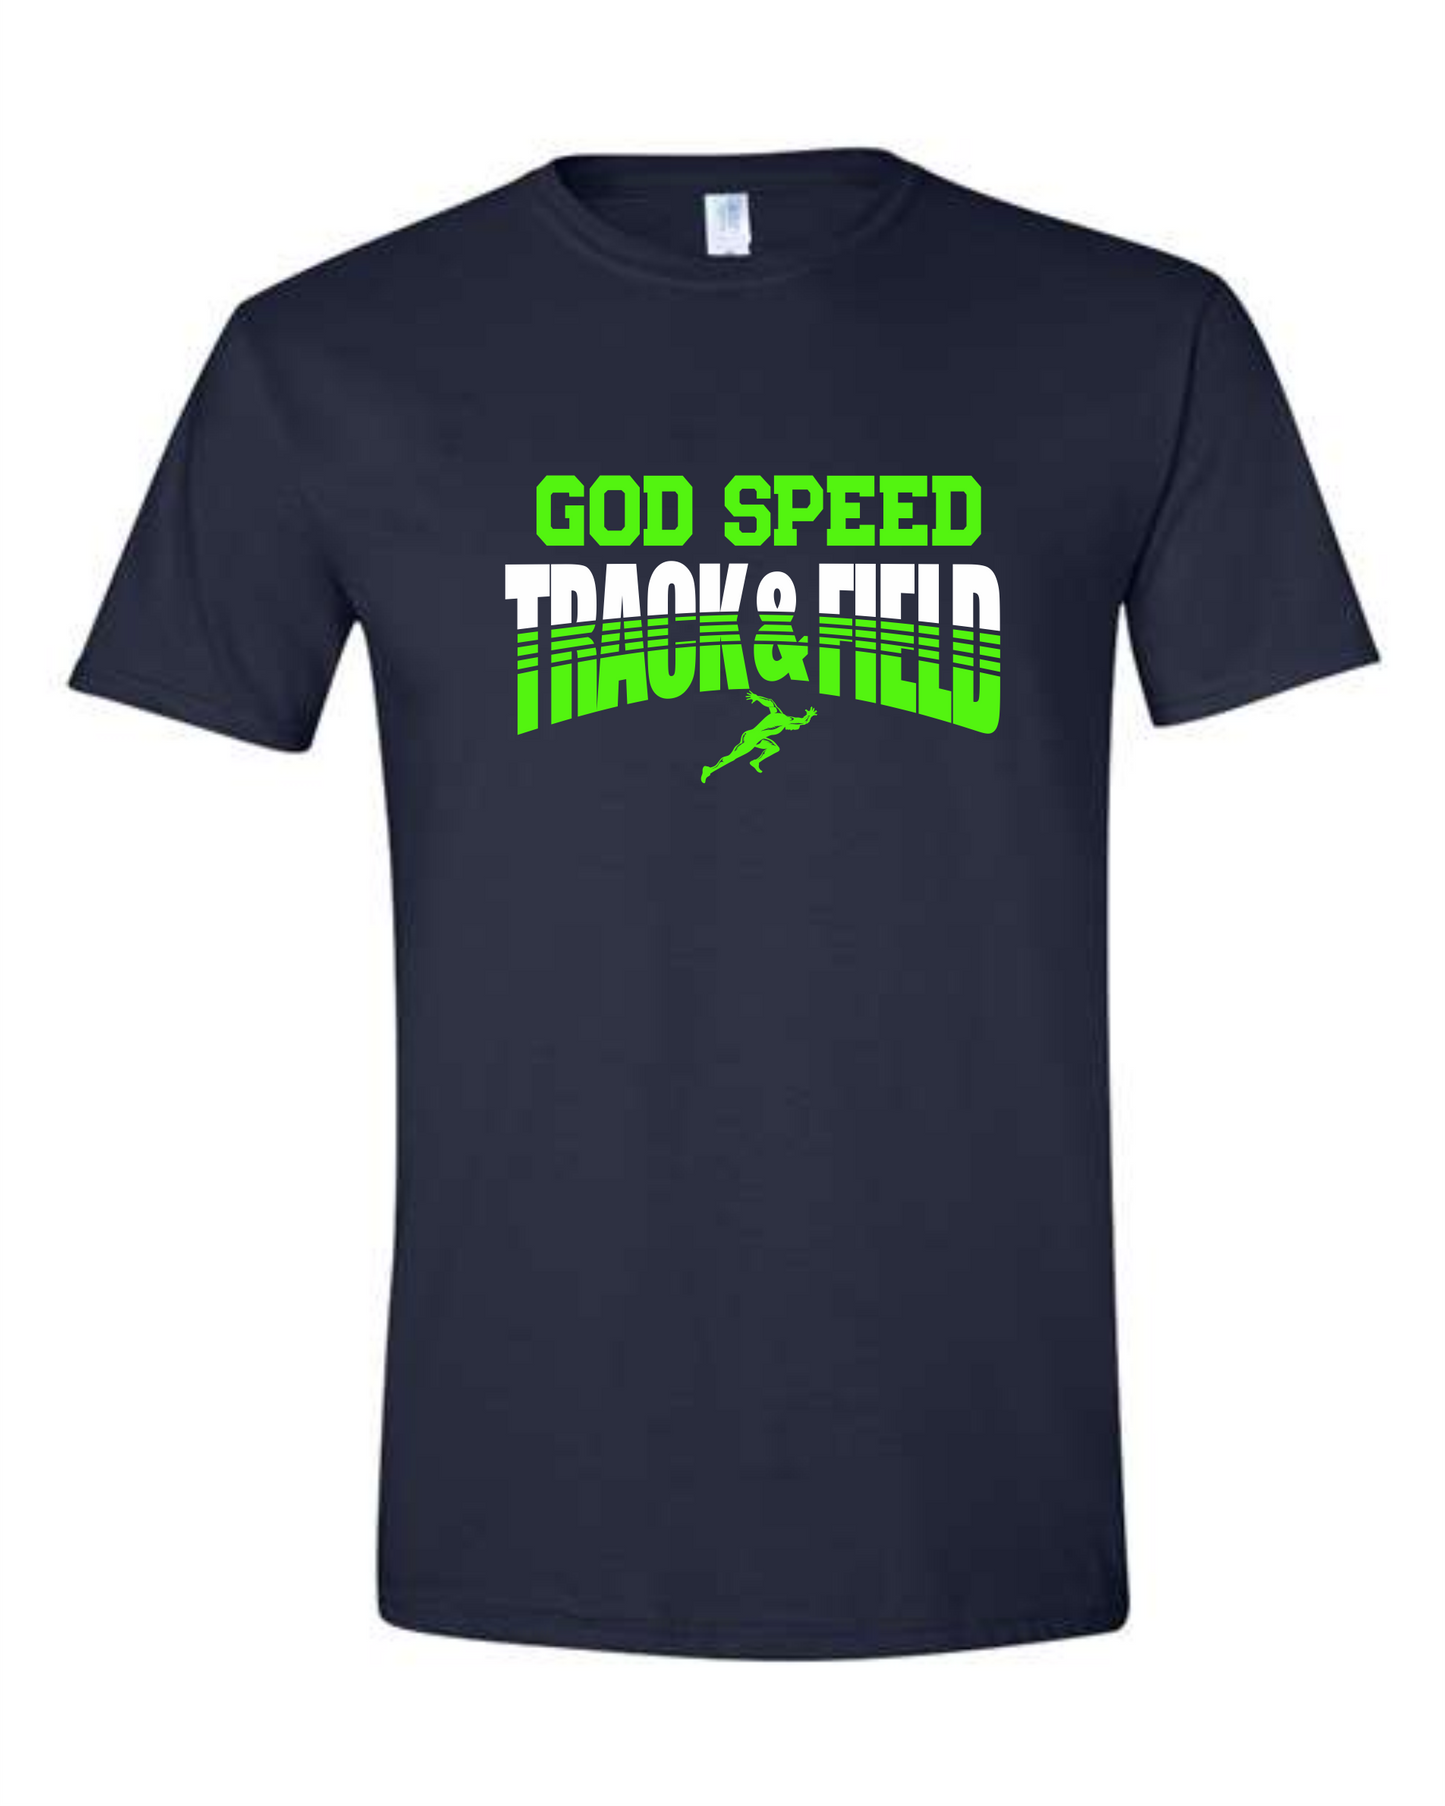 God Speed Track & Field Tee